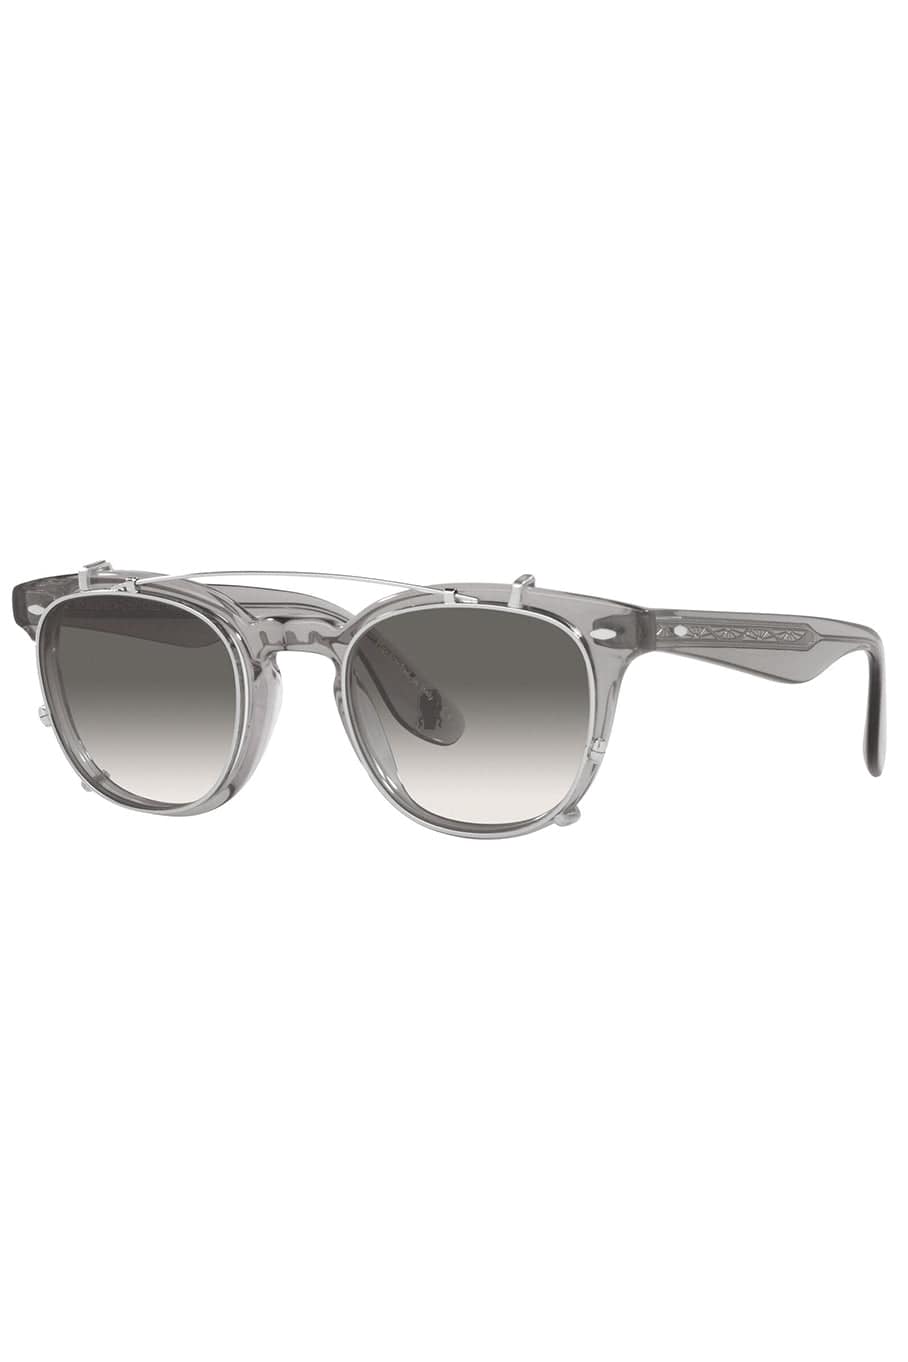 OLIVER PEOPLES-Jep Sunglasses - Grey-GREY